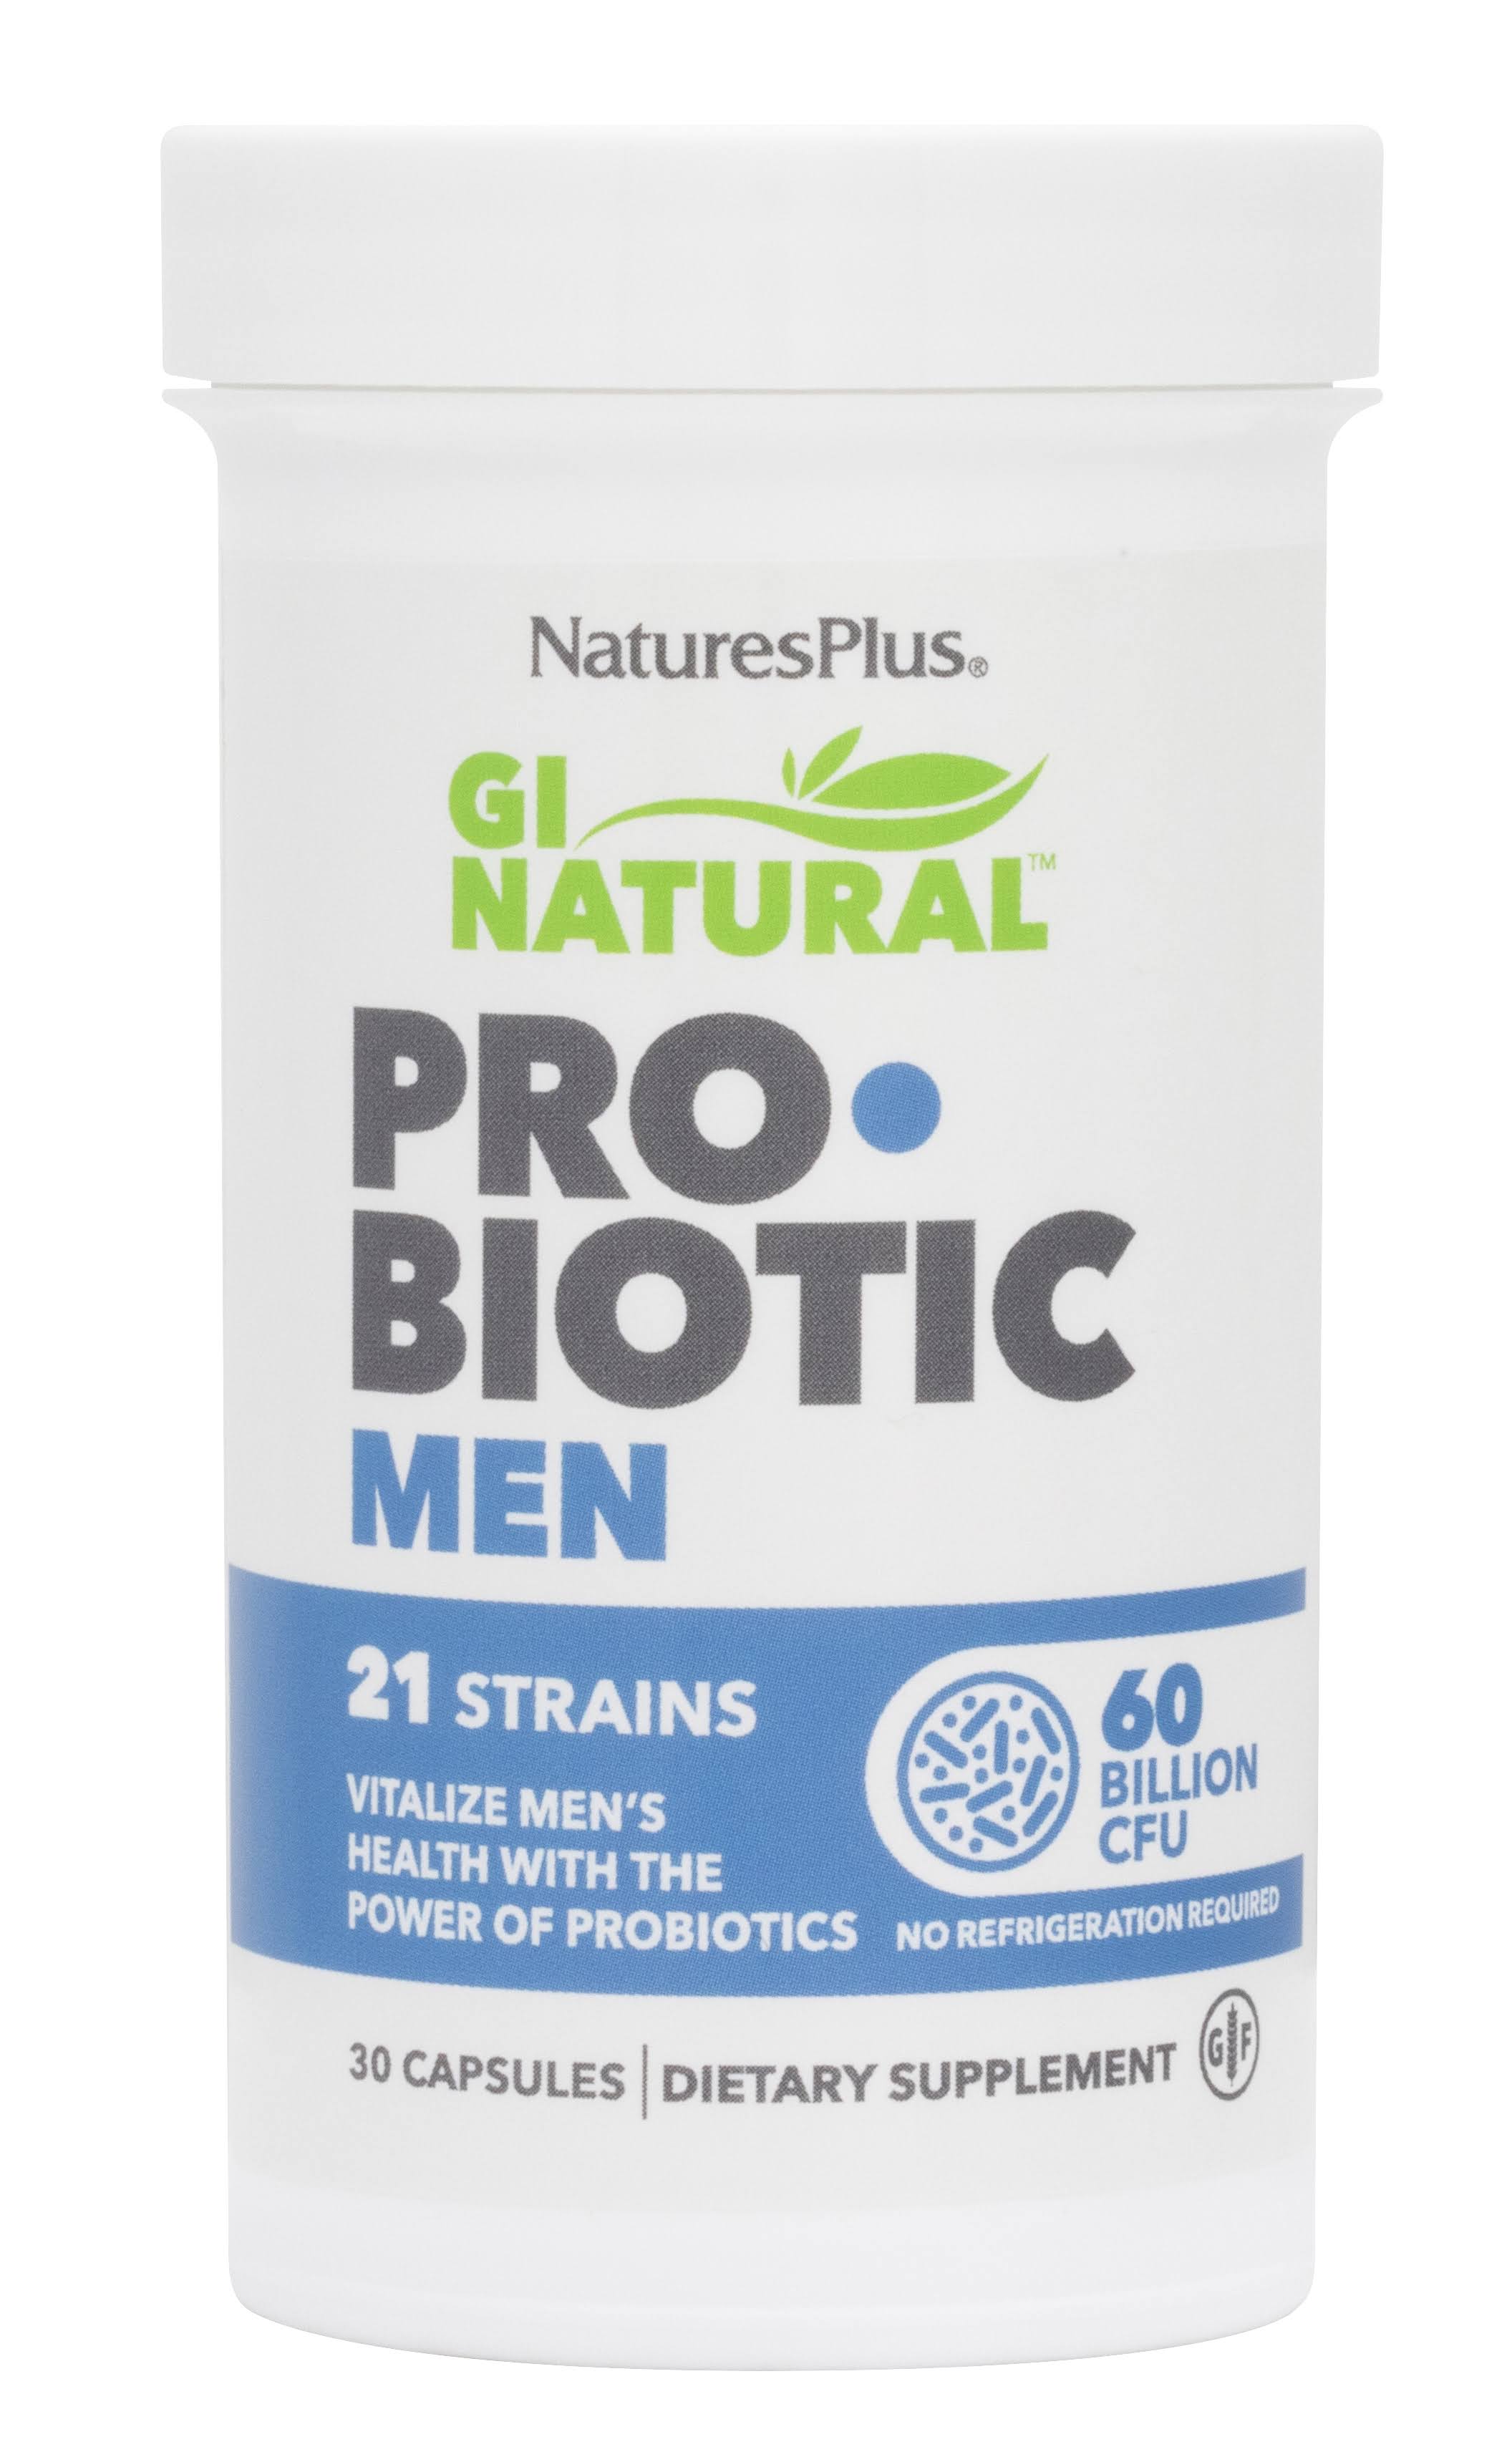 Nature's Plus Gi Natural Probiotic Men - 60 Billion CFU, 30 Capsules